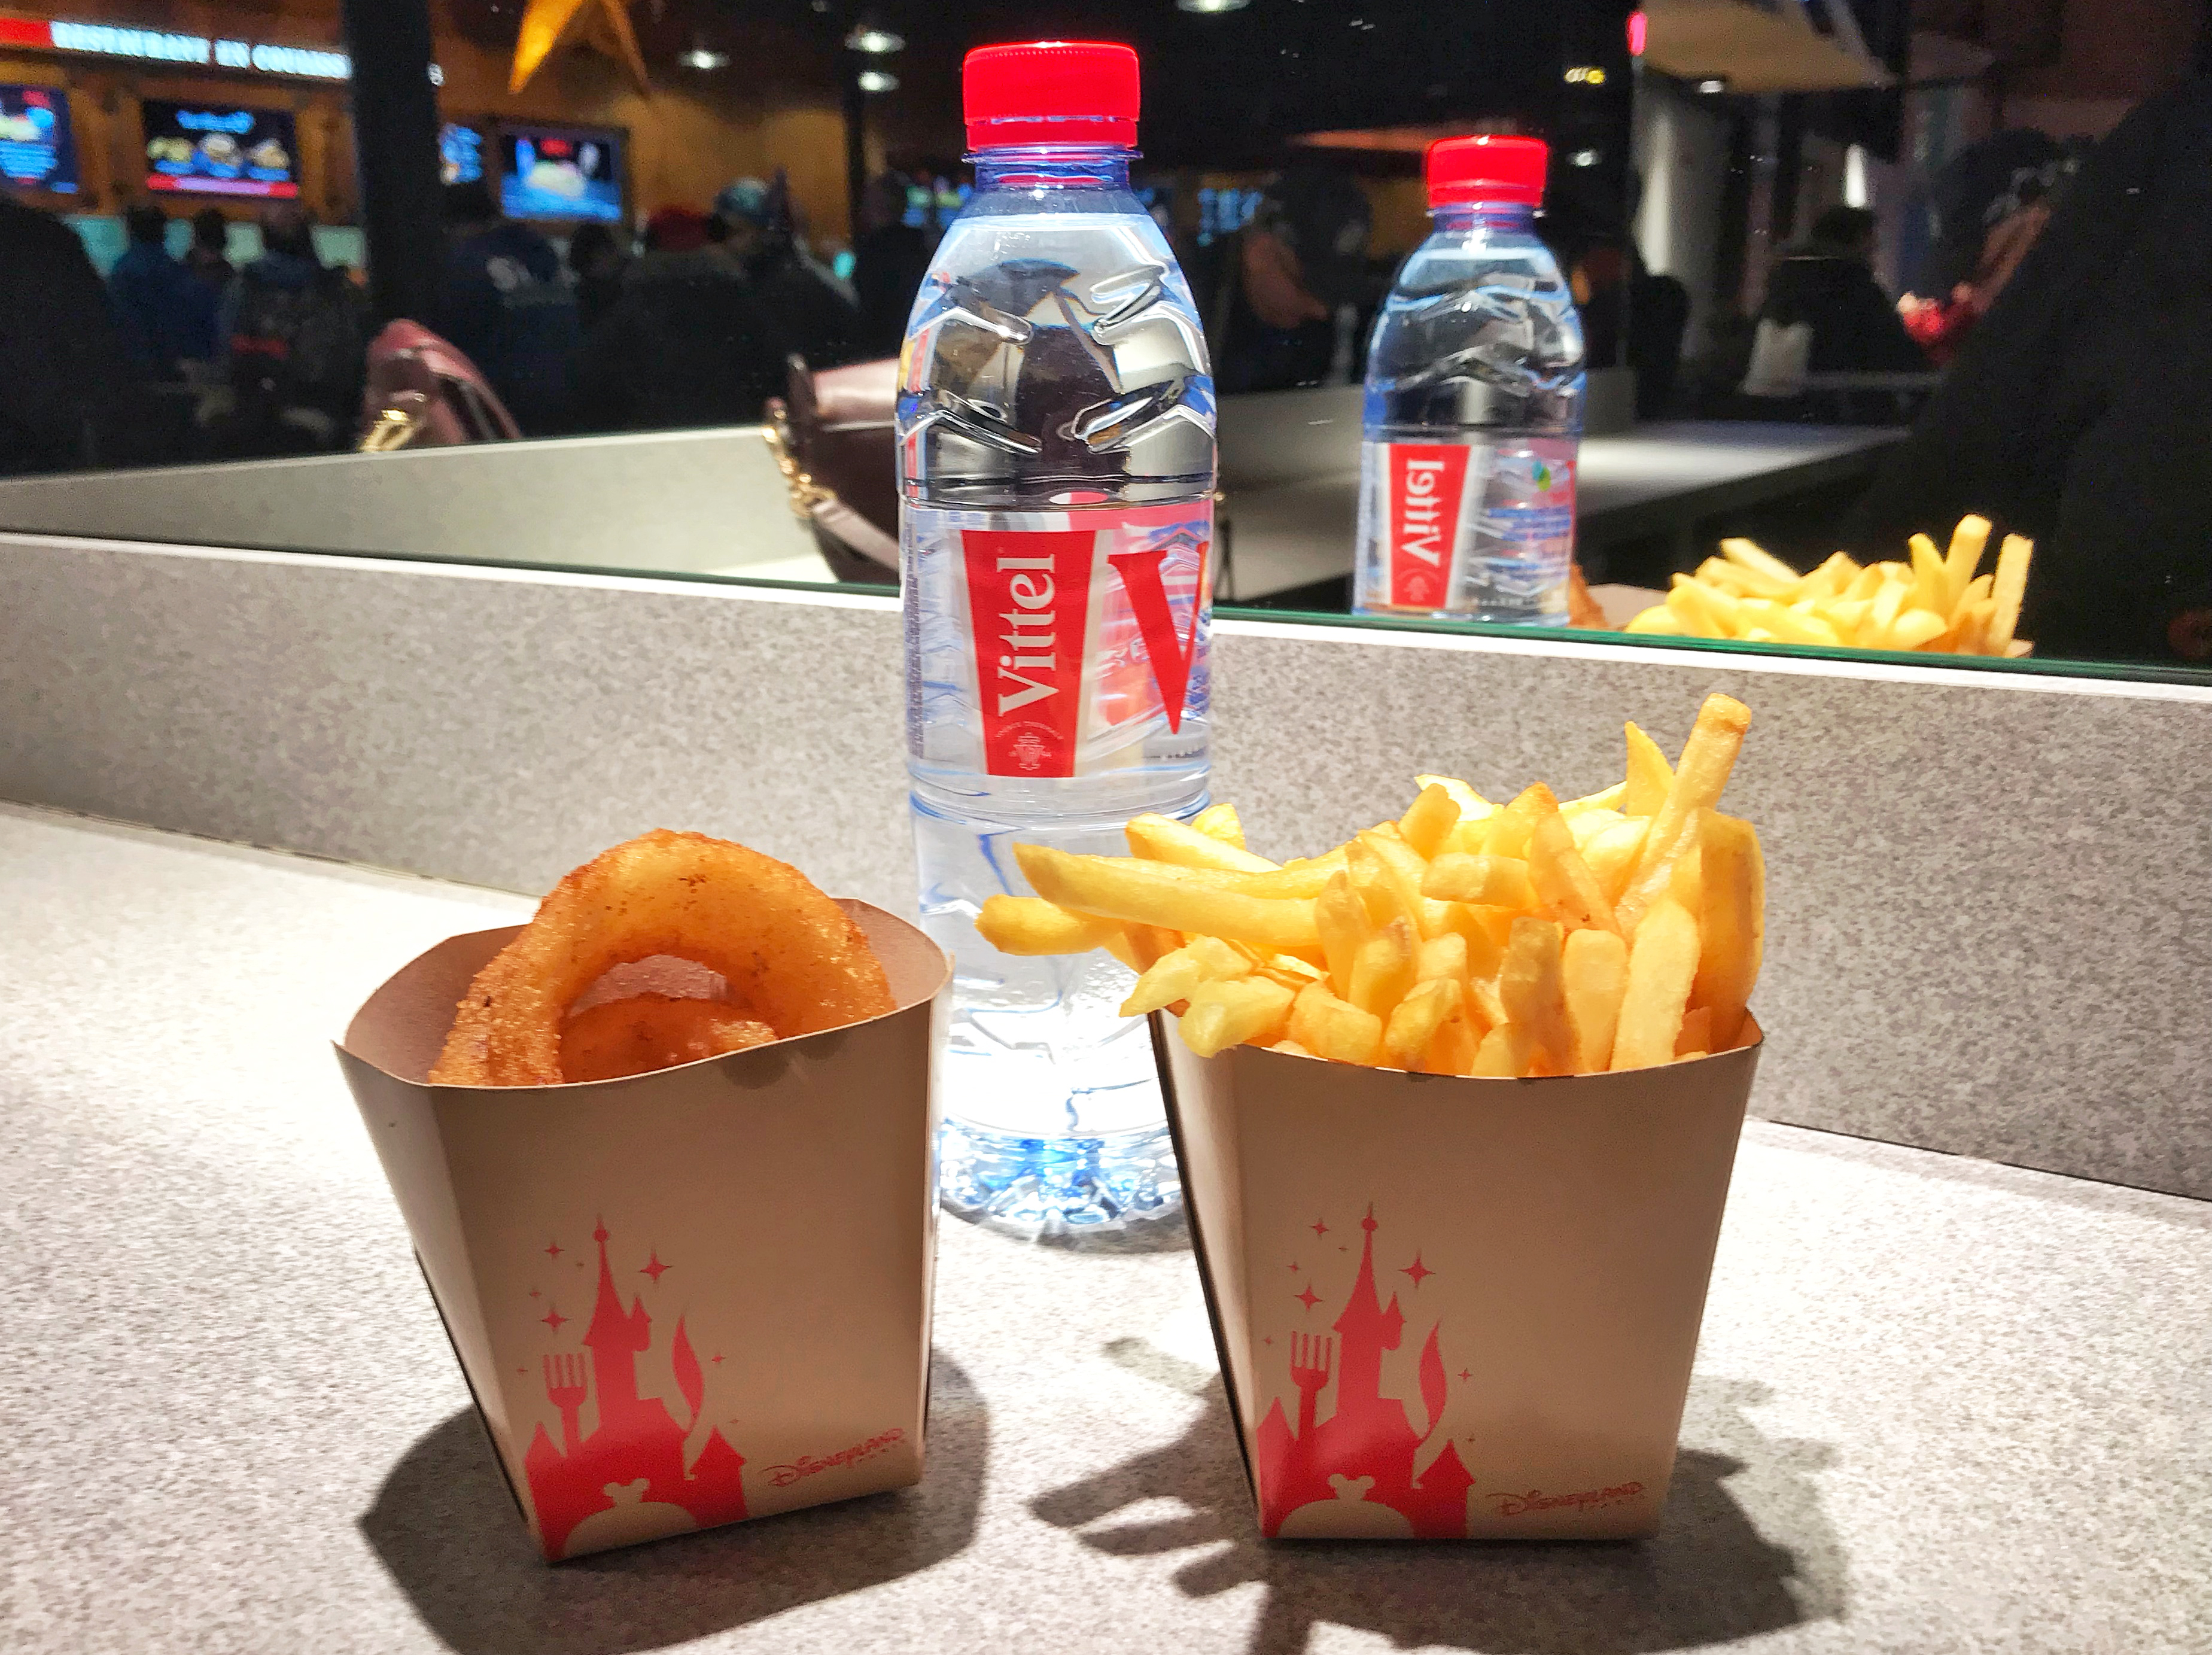 lunch options, fries, onion rings, water, disneyland paris studios, how to eat vegan at disneyland paris